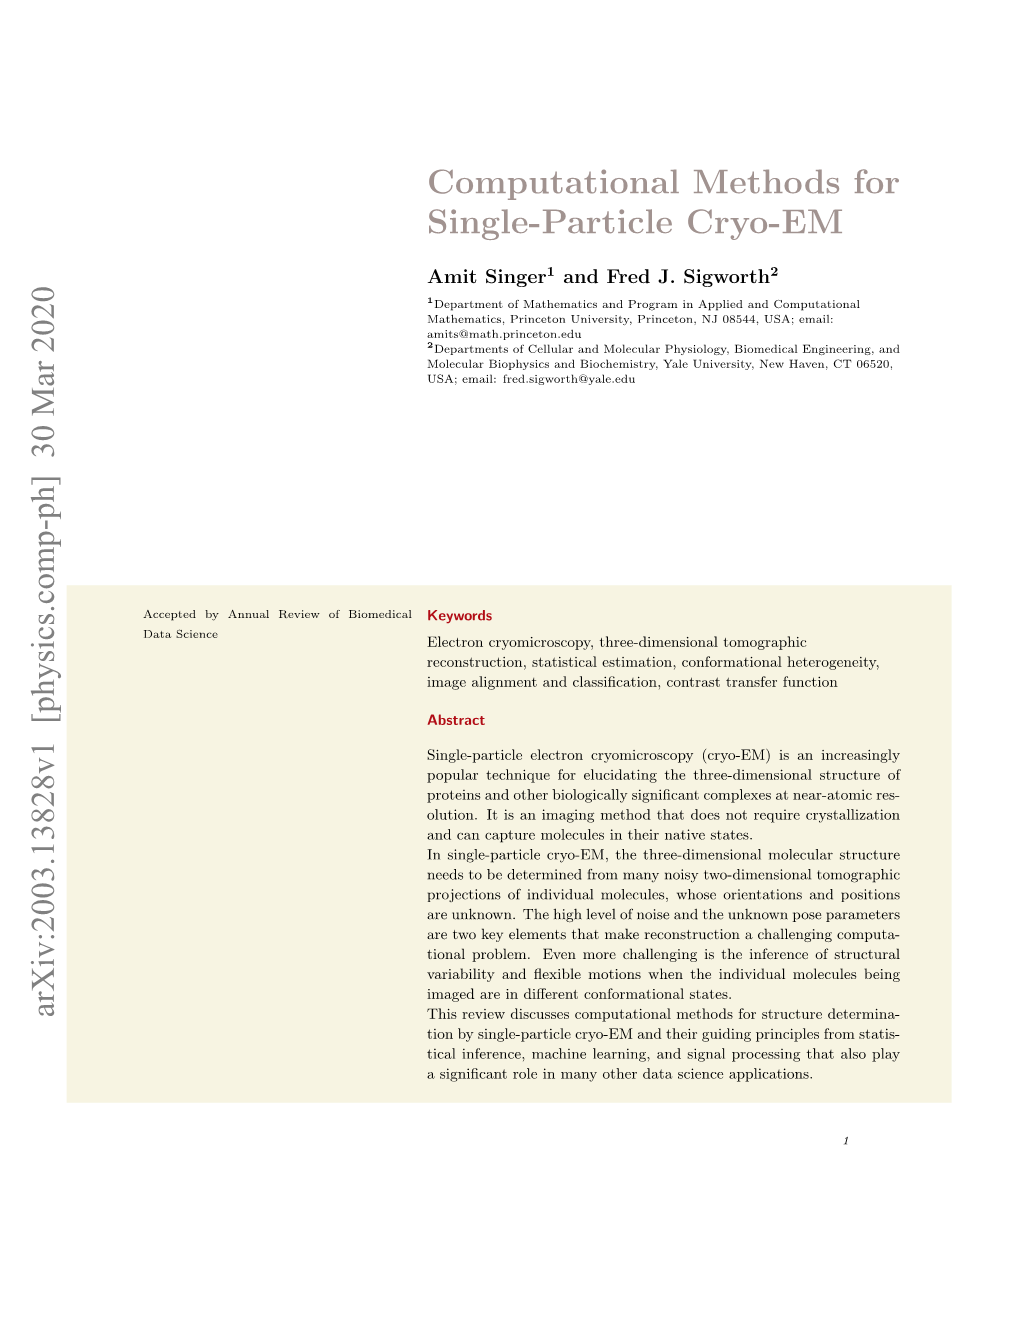 Computational Methods for Single-Particle Cryo-EM